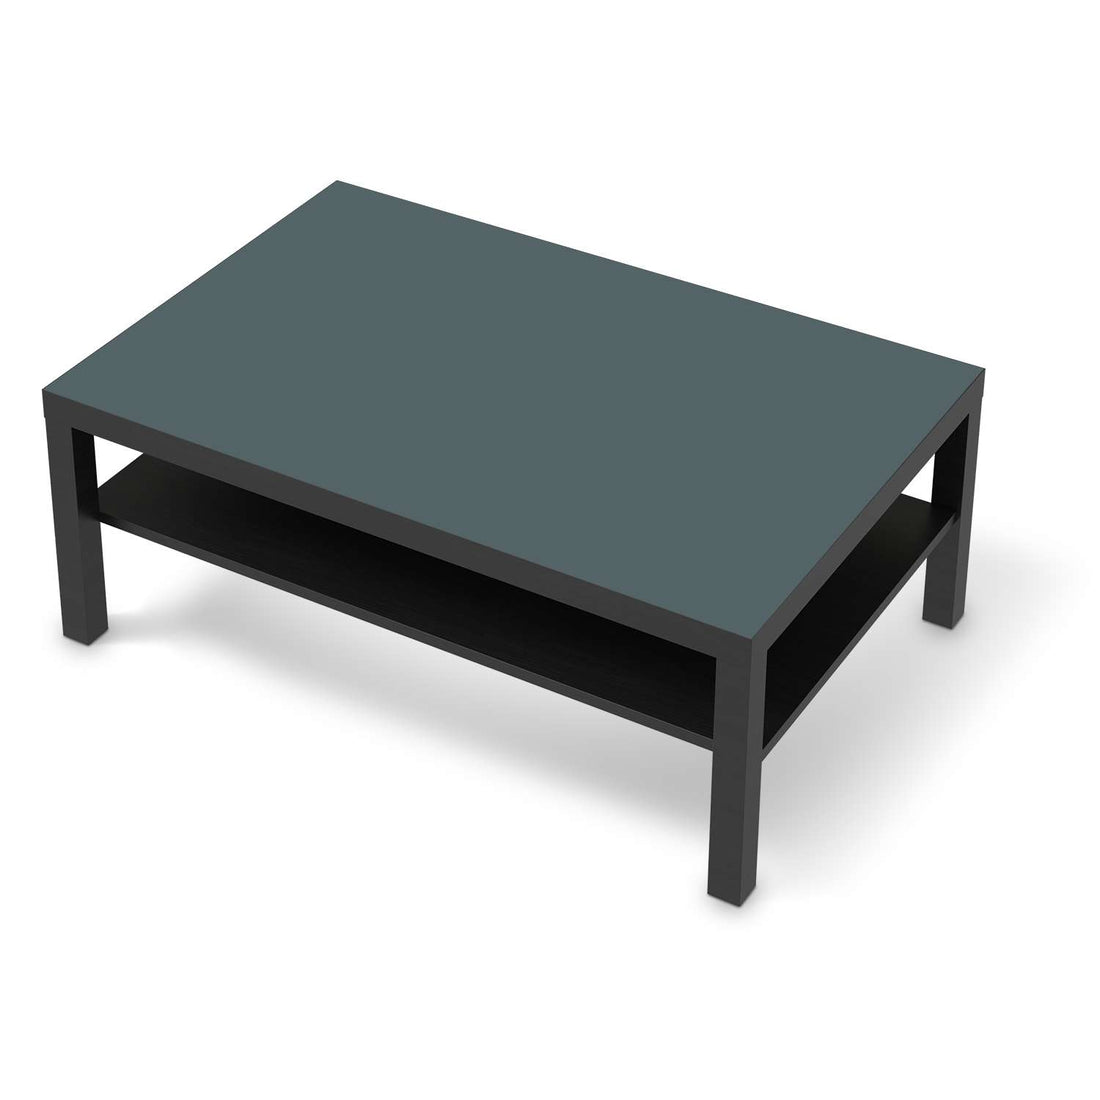 Klebefolie Blaugrau Light - IKEA Lack Tisch 118x78 cm - schwarz